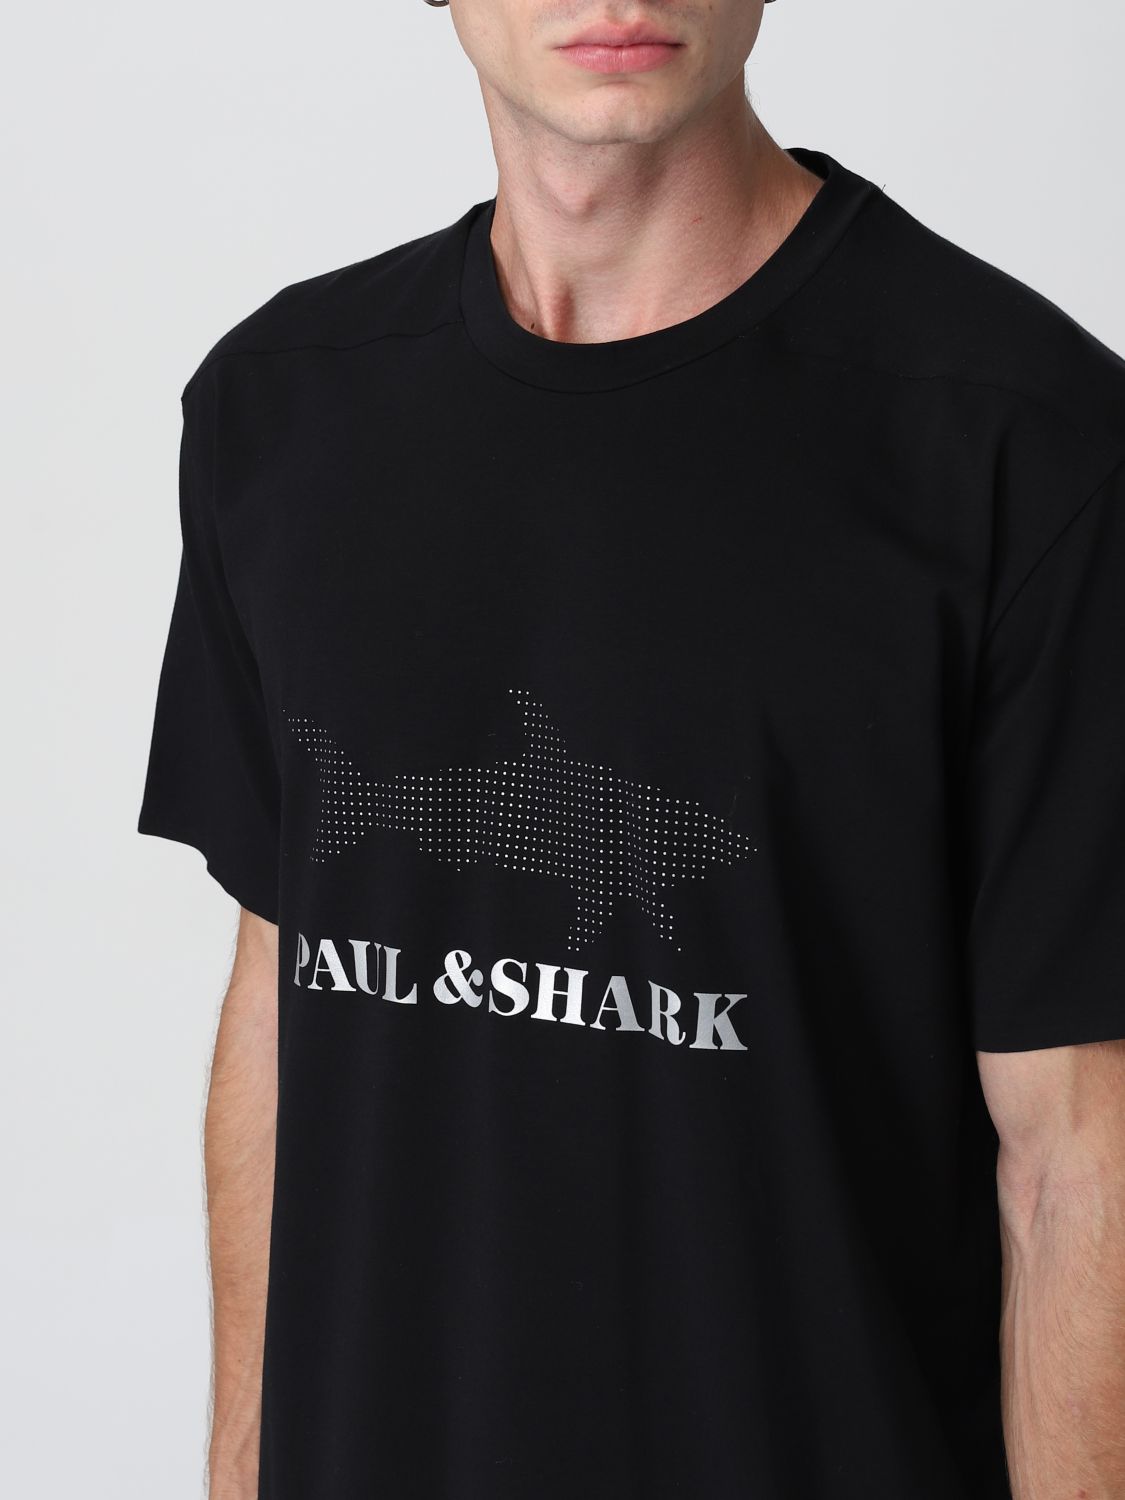 Paul & Shark Outlet: t-shirt for man - Black | & Shark t-shirt 21411019 online on GIGLIO.COM